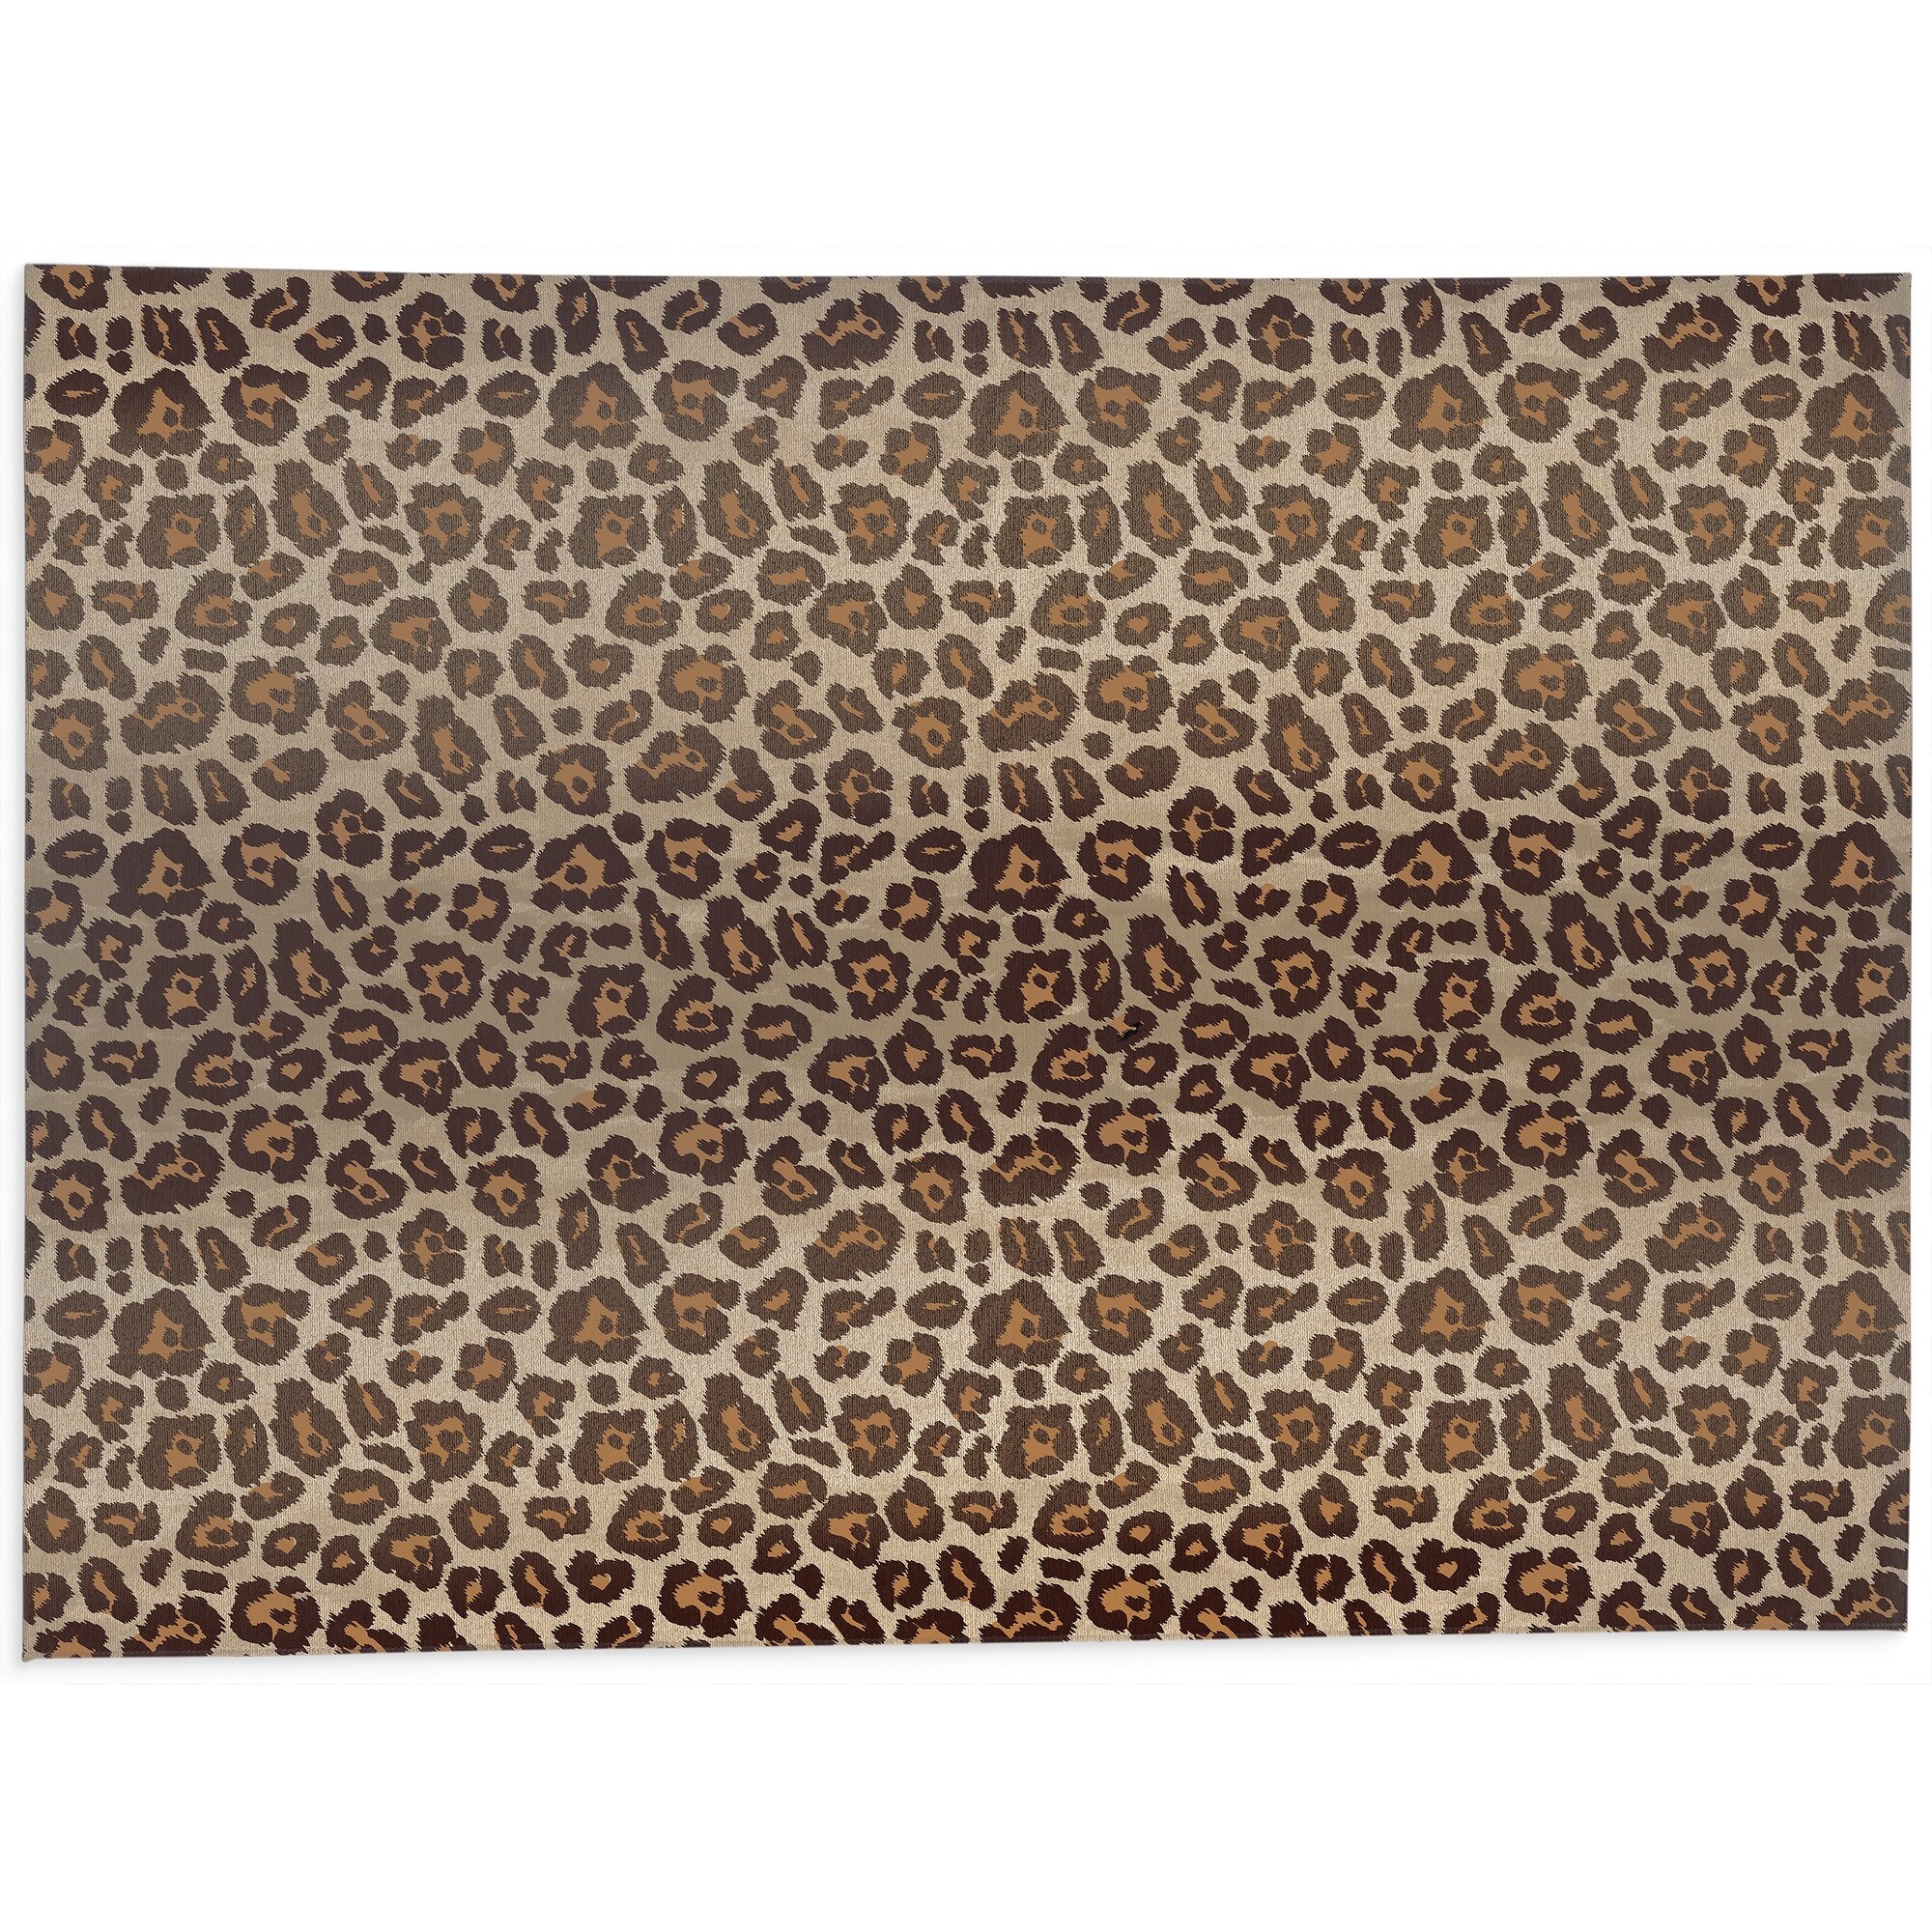 Leopard Cheetah Print Bathroom Rugs Soft Bath Mat Non Slip Absorbent Indoor  Floor Rug Kitchen Mats for Home Bedroom Decor, 31.5x19.5 Inches